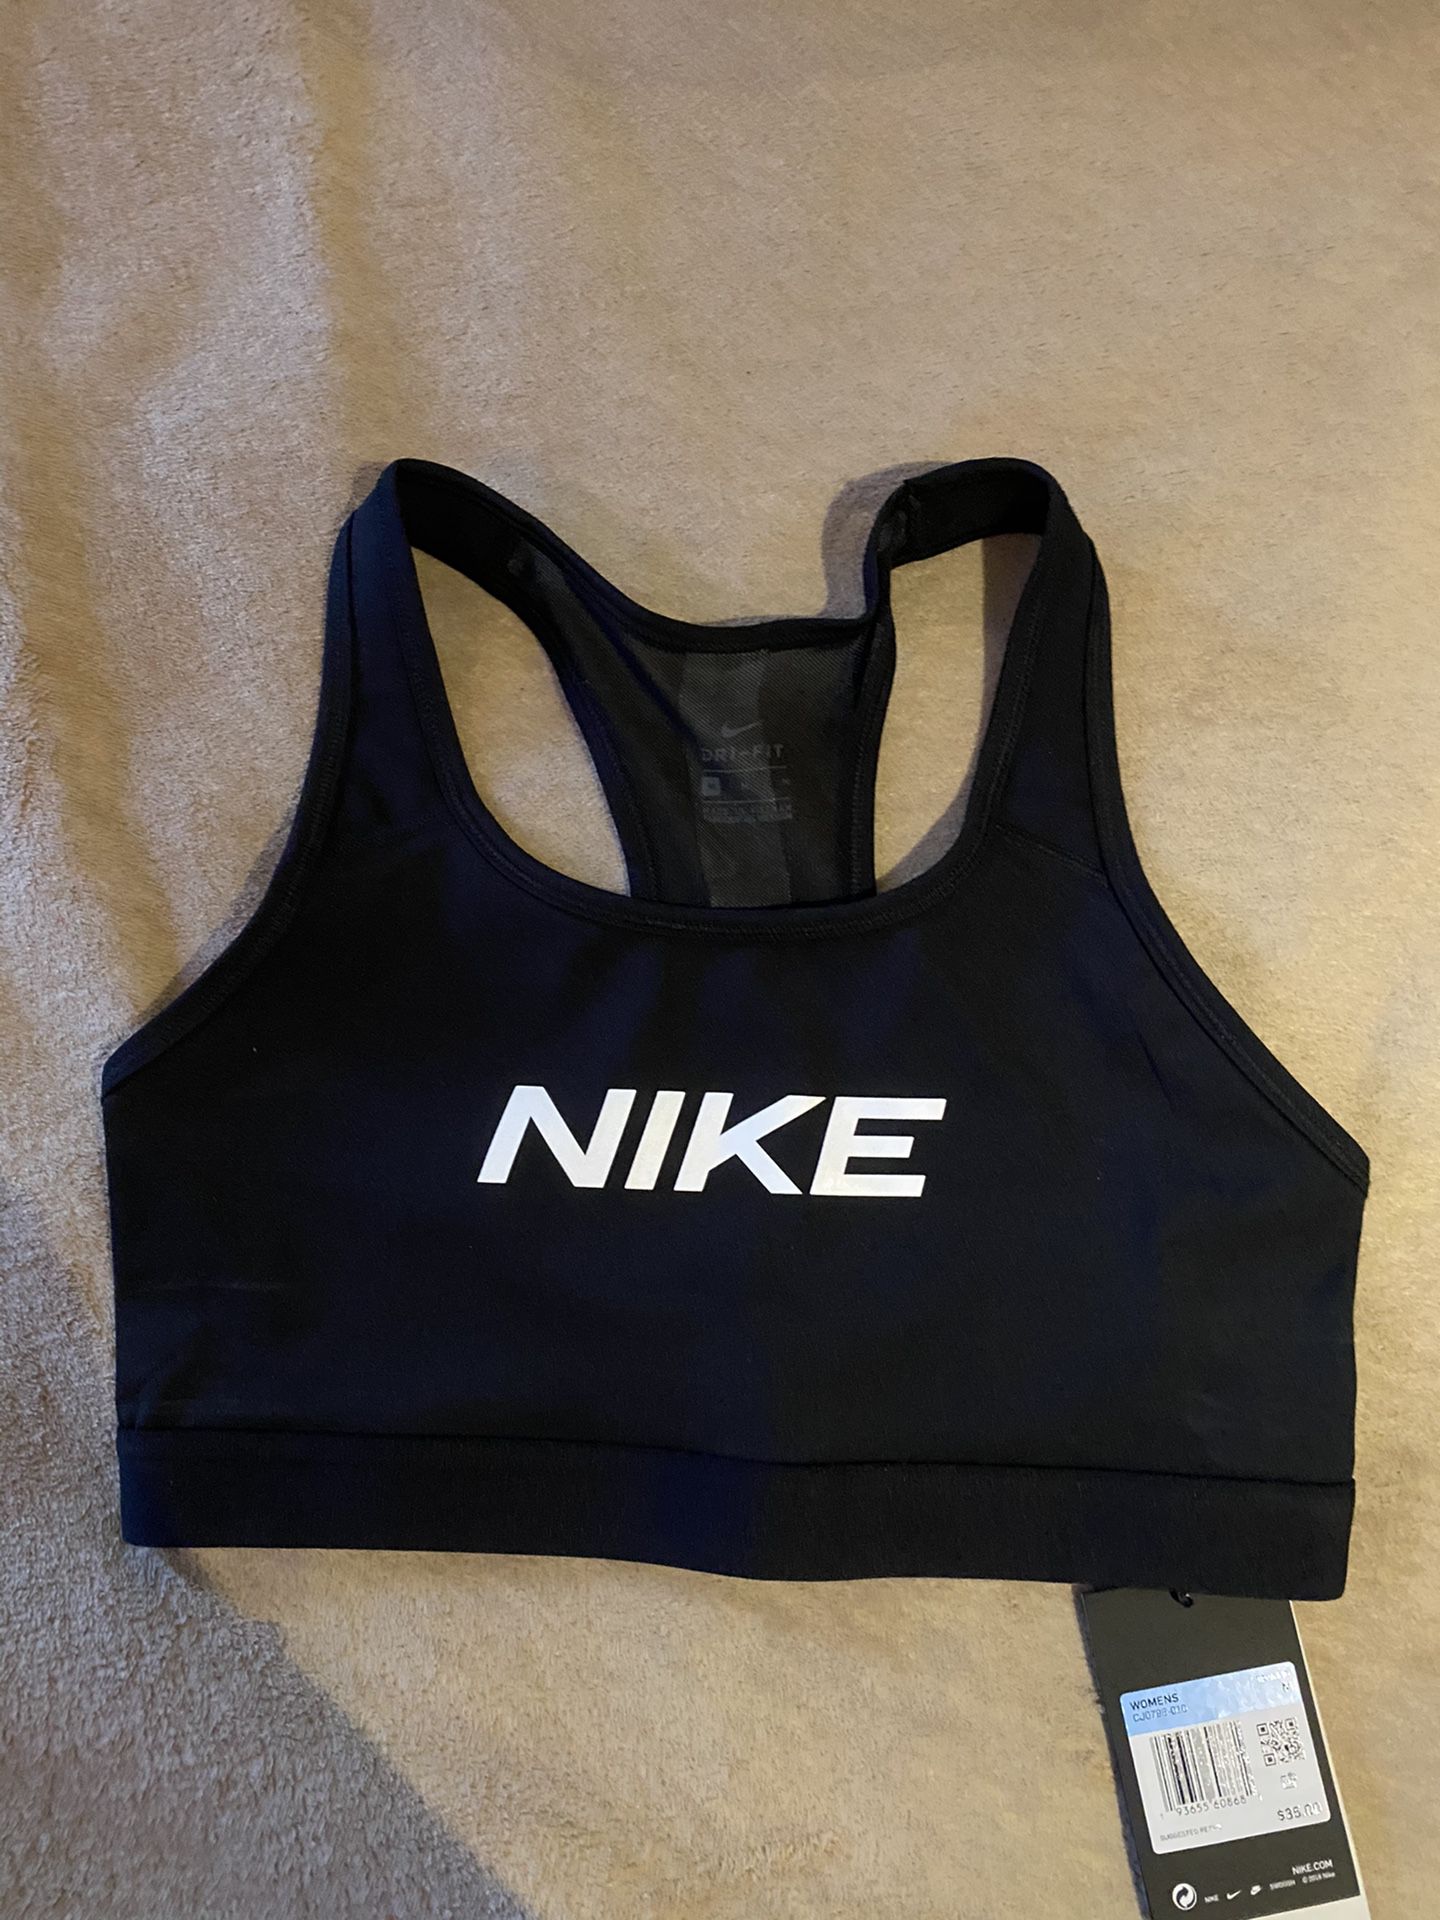 Nike sports bra size medium new